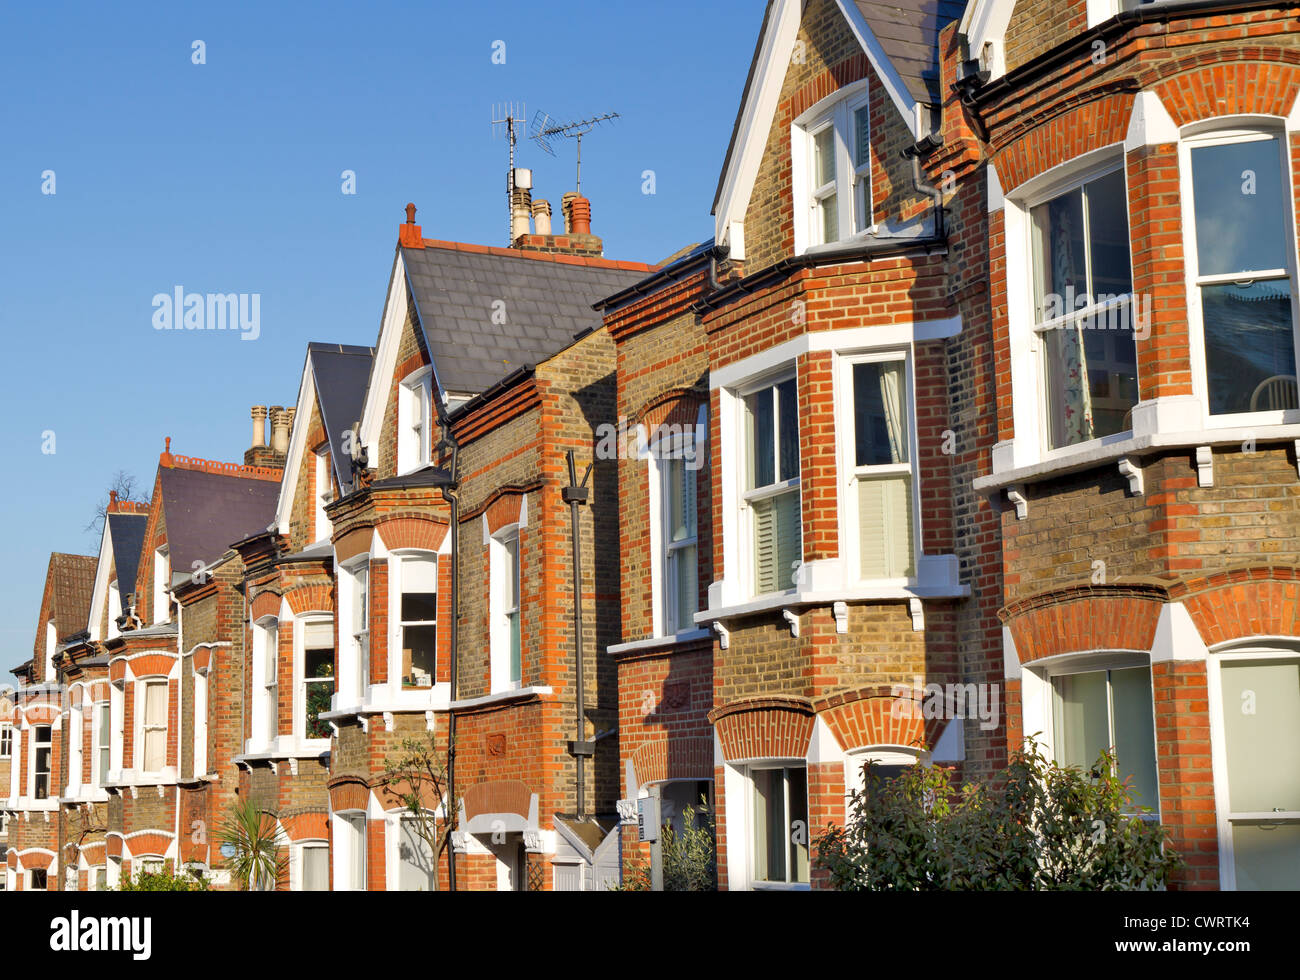 Casas típicas inglesas fotografías e imágenes de alta resolución - Alamy